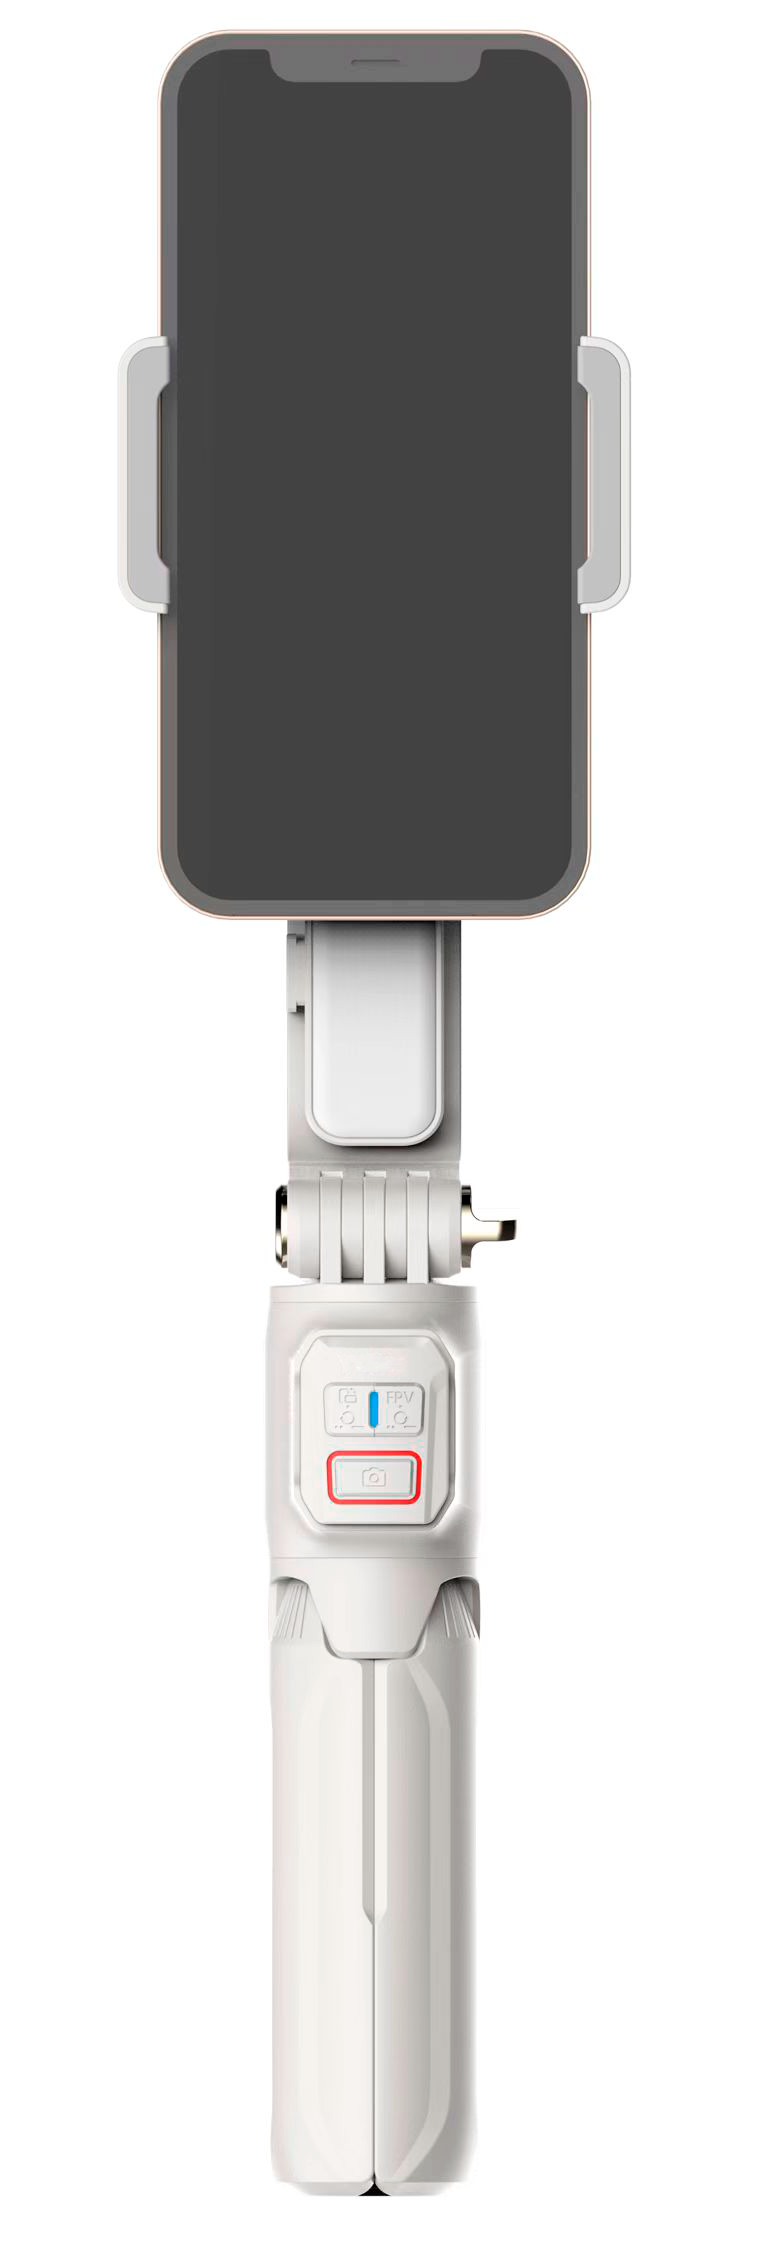 Стабилизатор для смартфона GimbalPro A10 White GimbalPro - фото 1